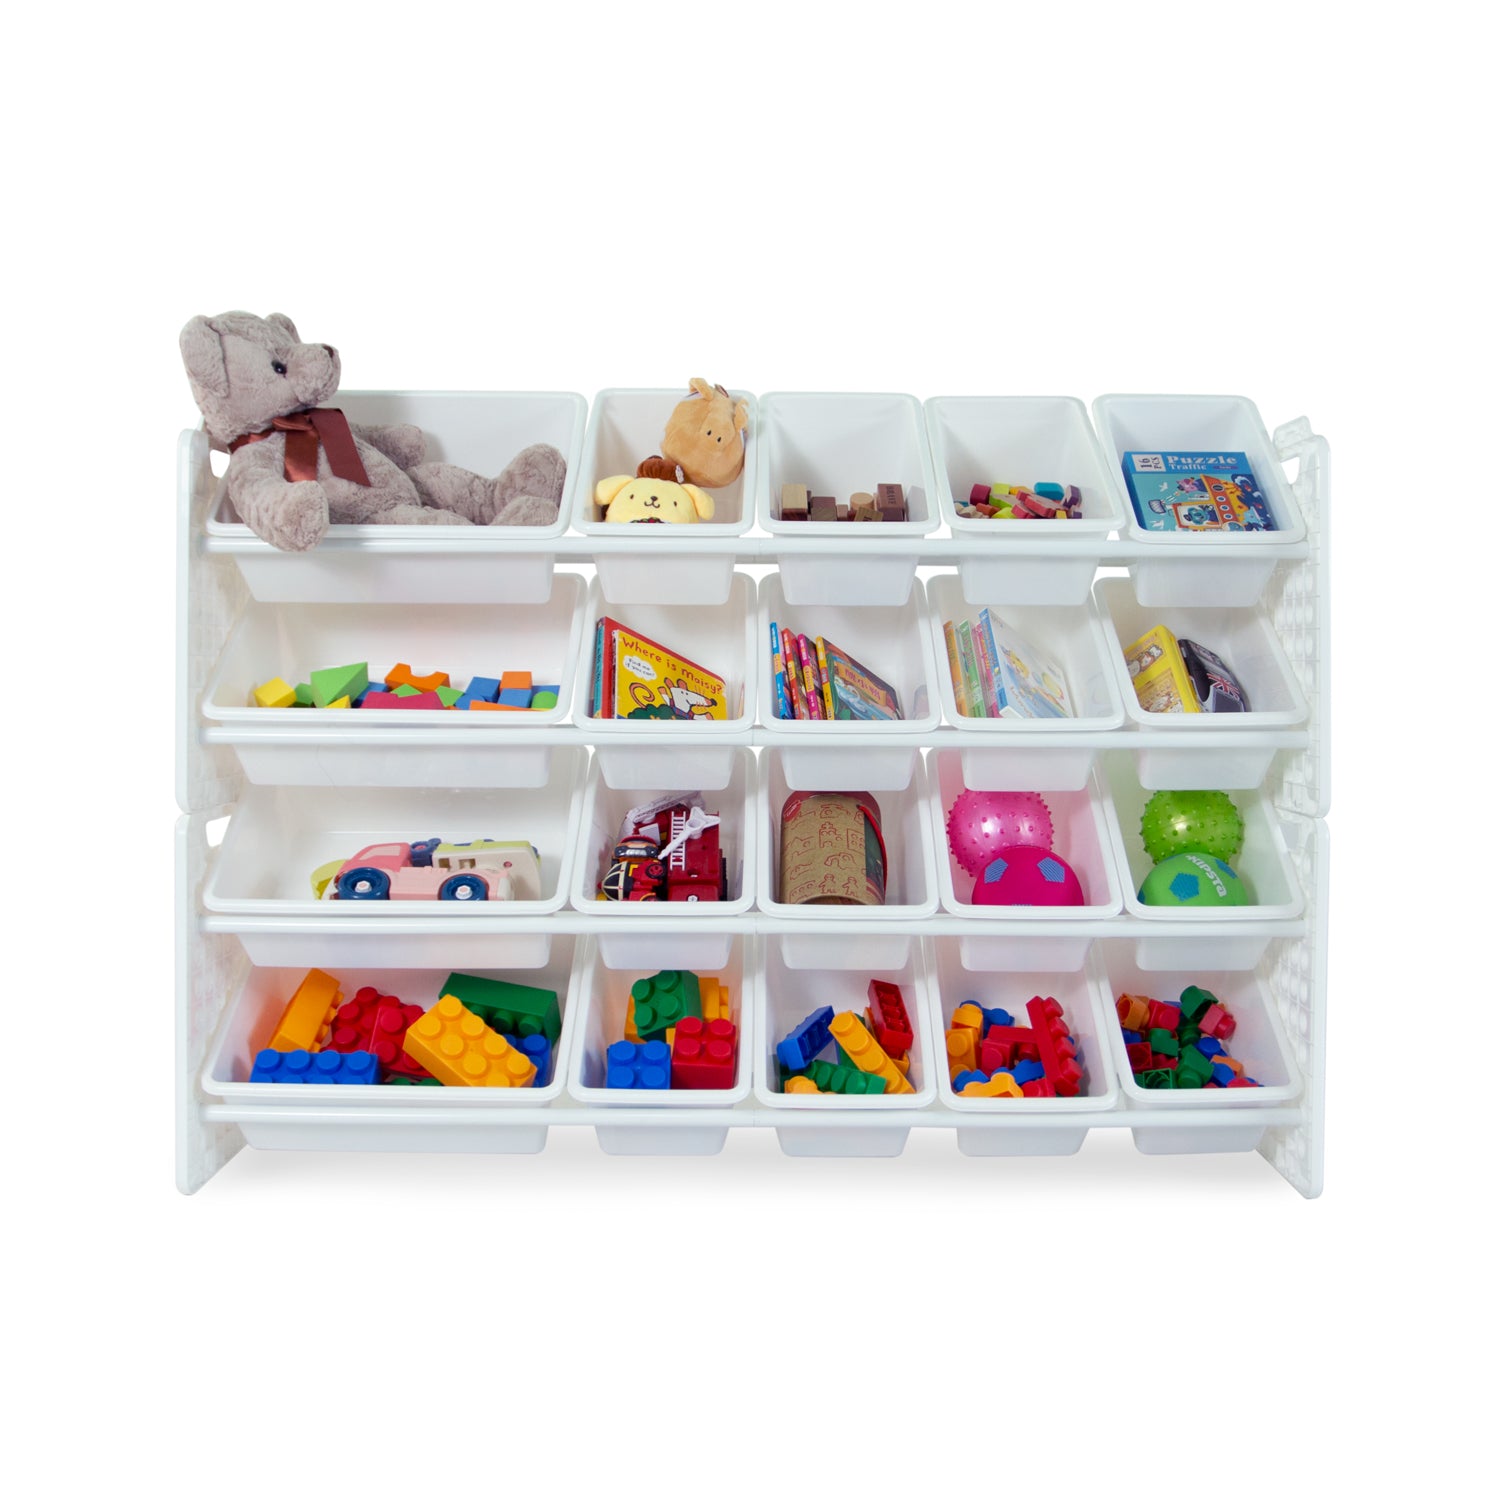 UNiPLAY 20 Bins Toy Storage Organizer - White (UB45811)